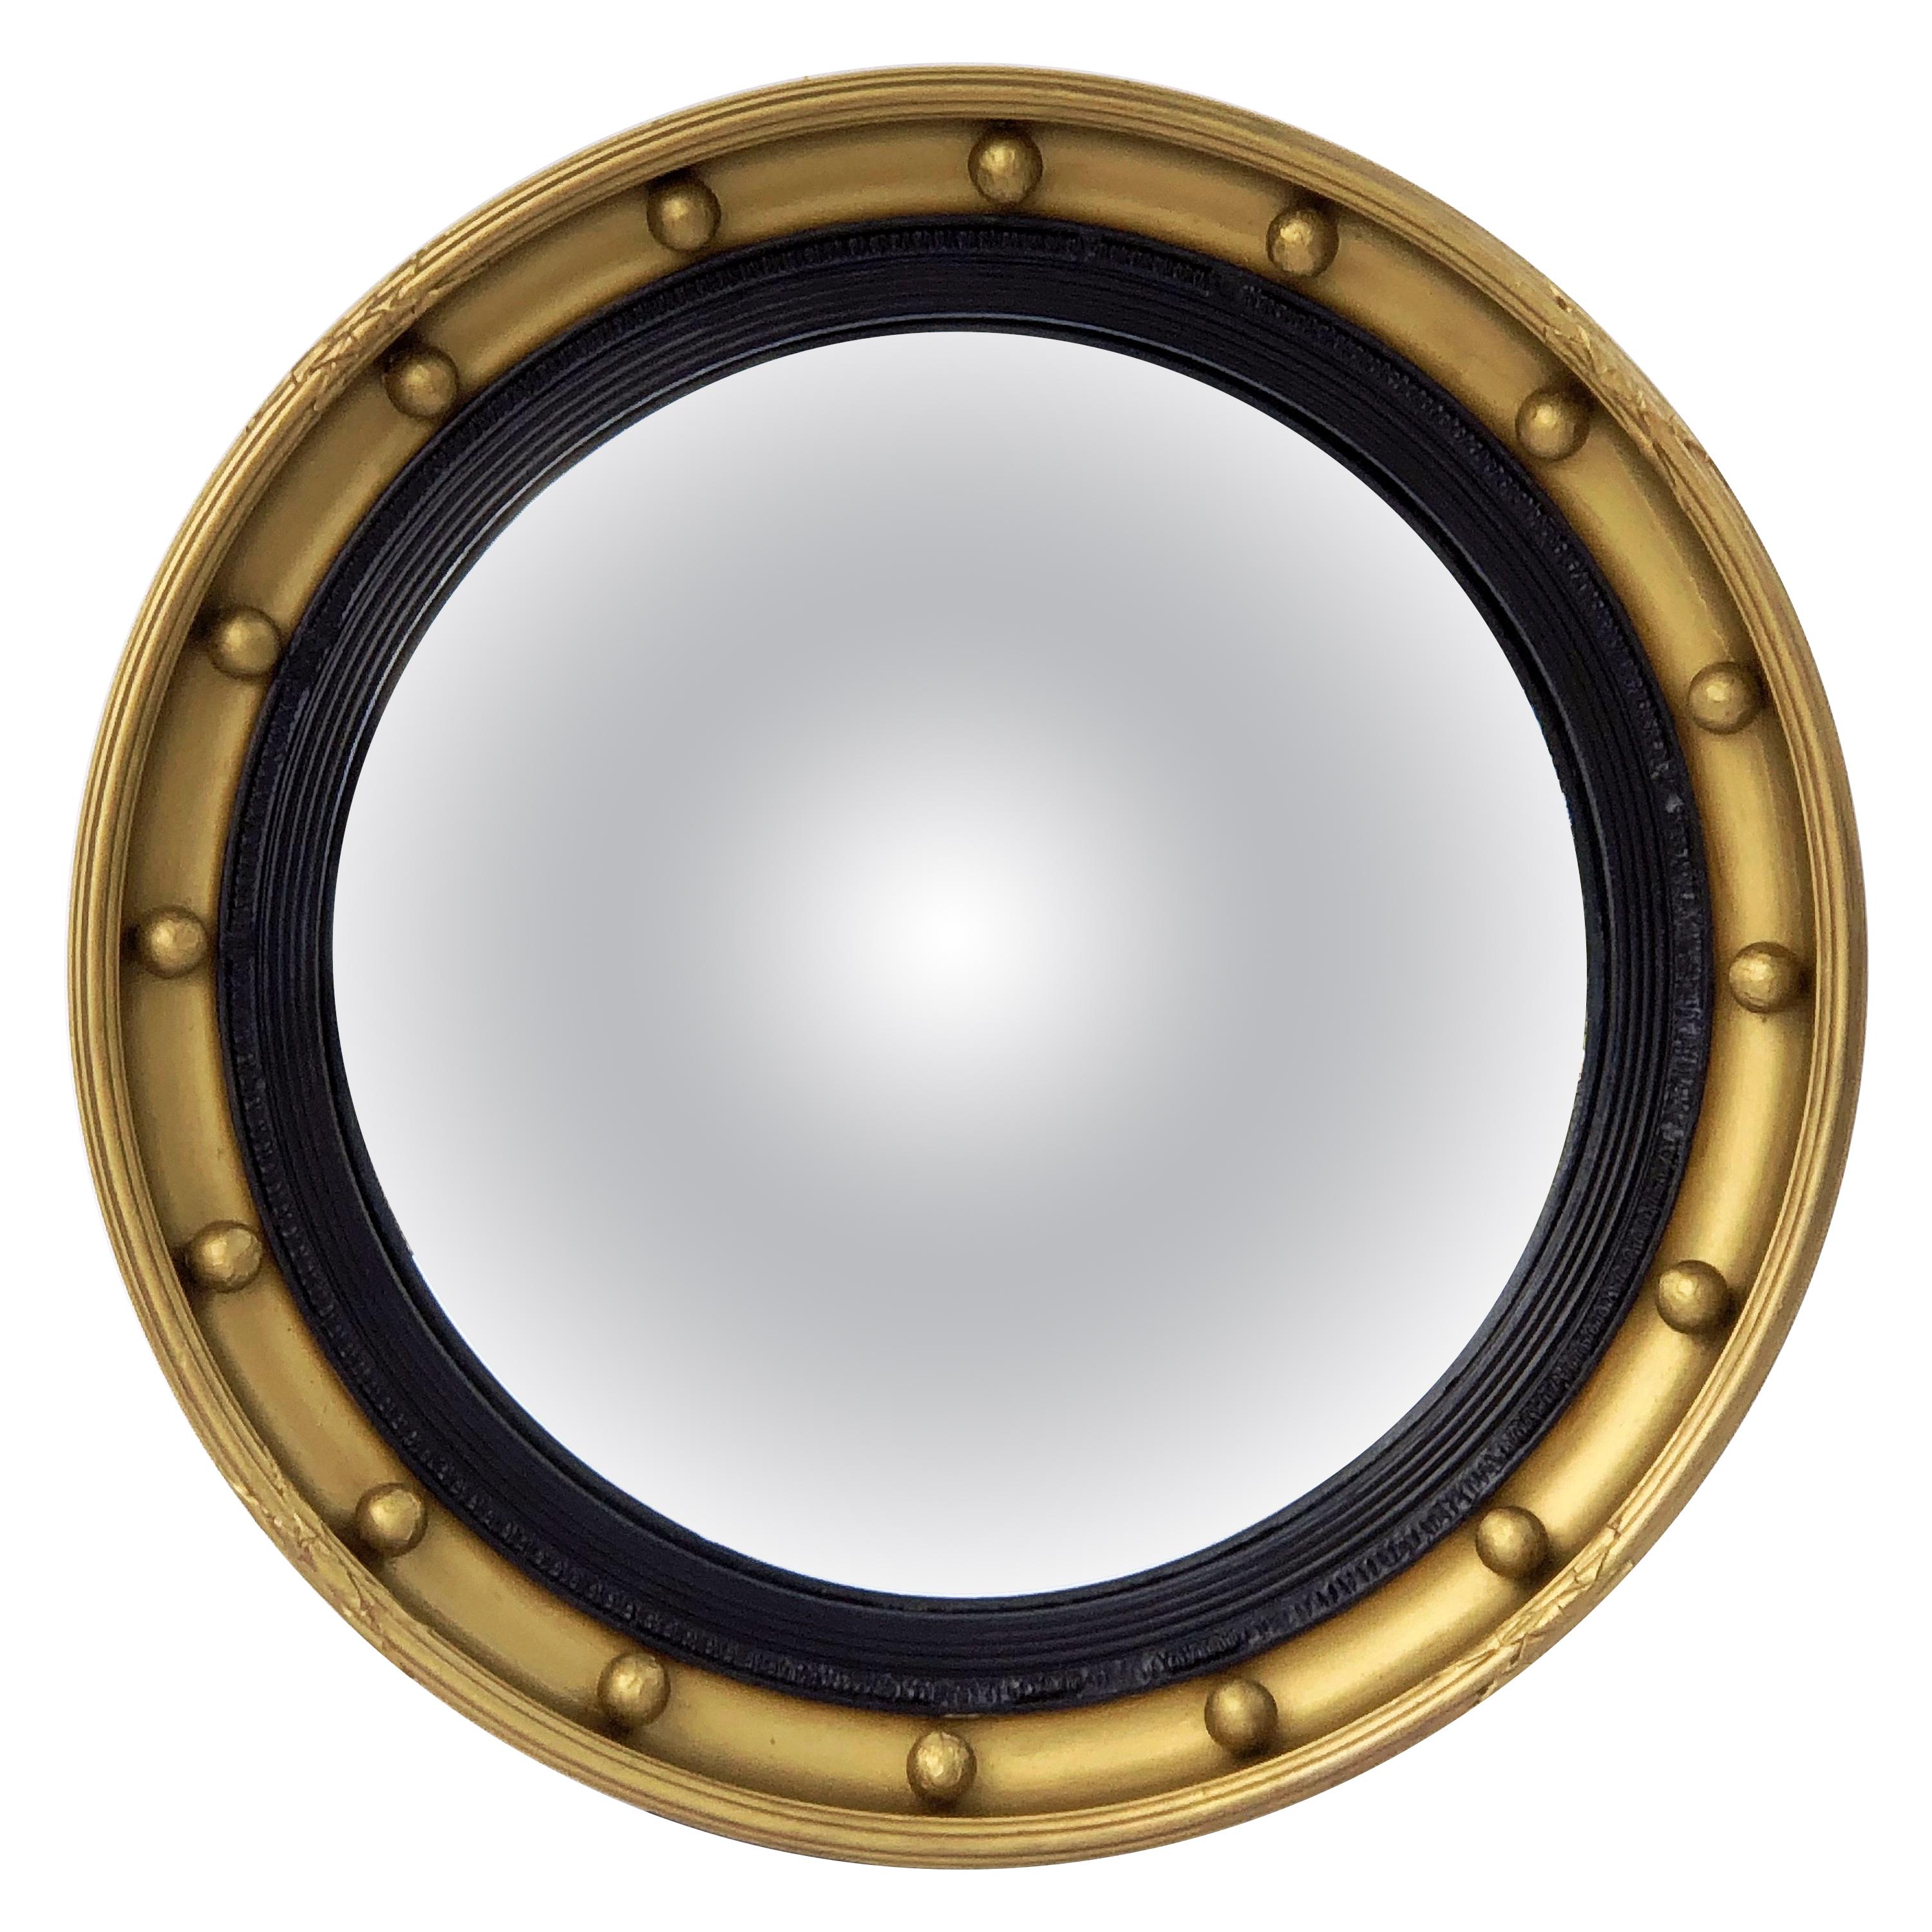 English Round Gilt Framed Convex Mirror (Diameter 18 3/4)